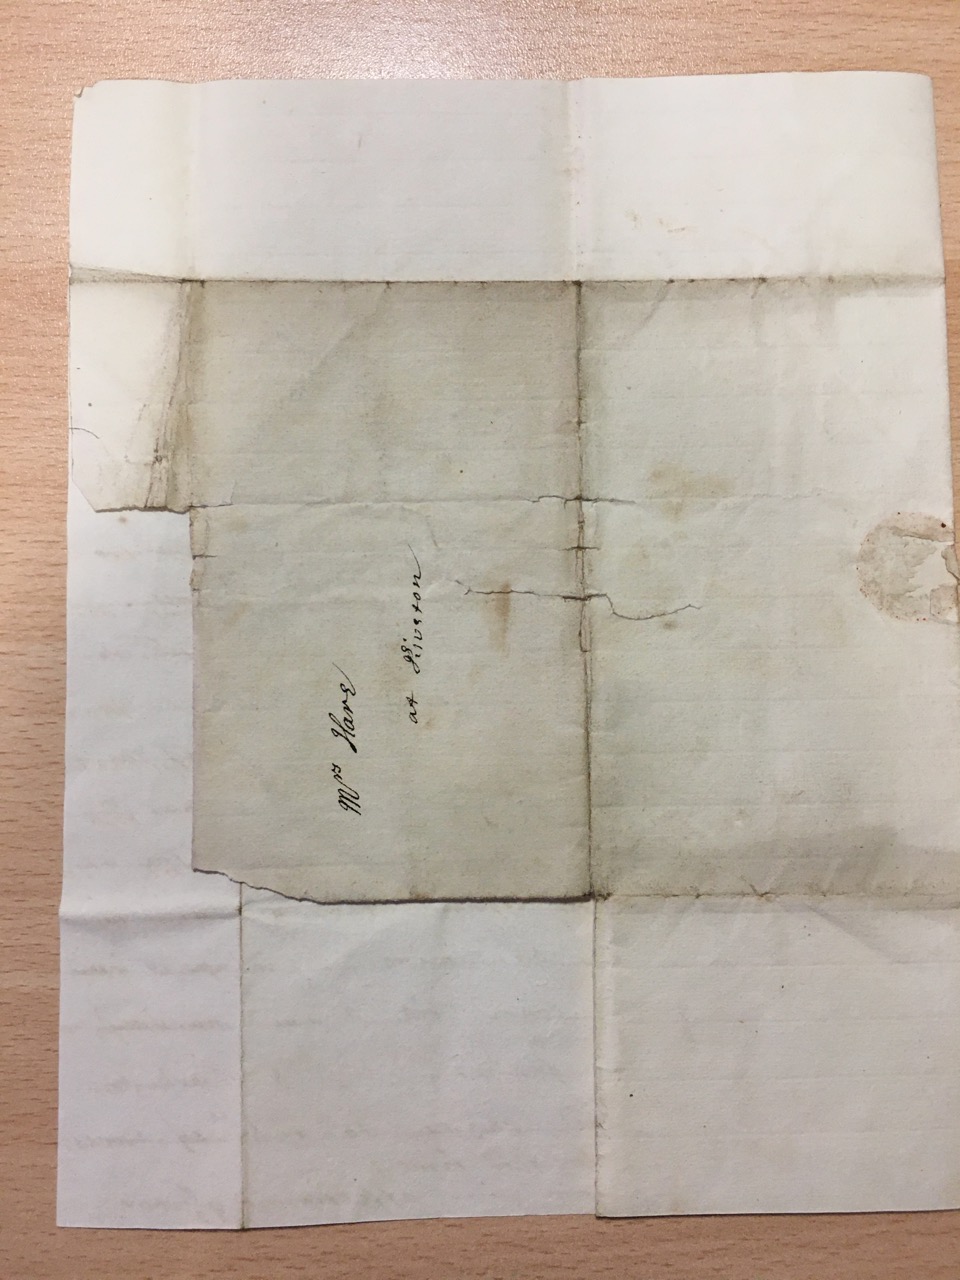 Image #3 of letter: Elizabeth Hare to Ann Hare,  4 April 177[?]